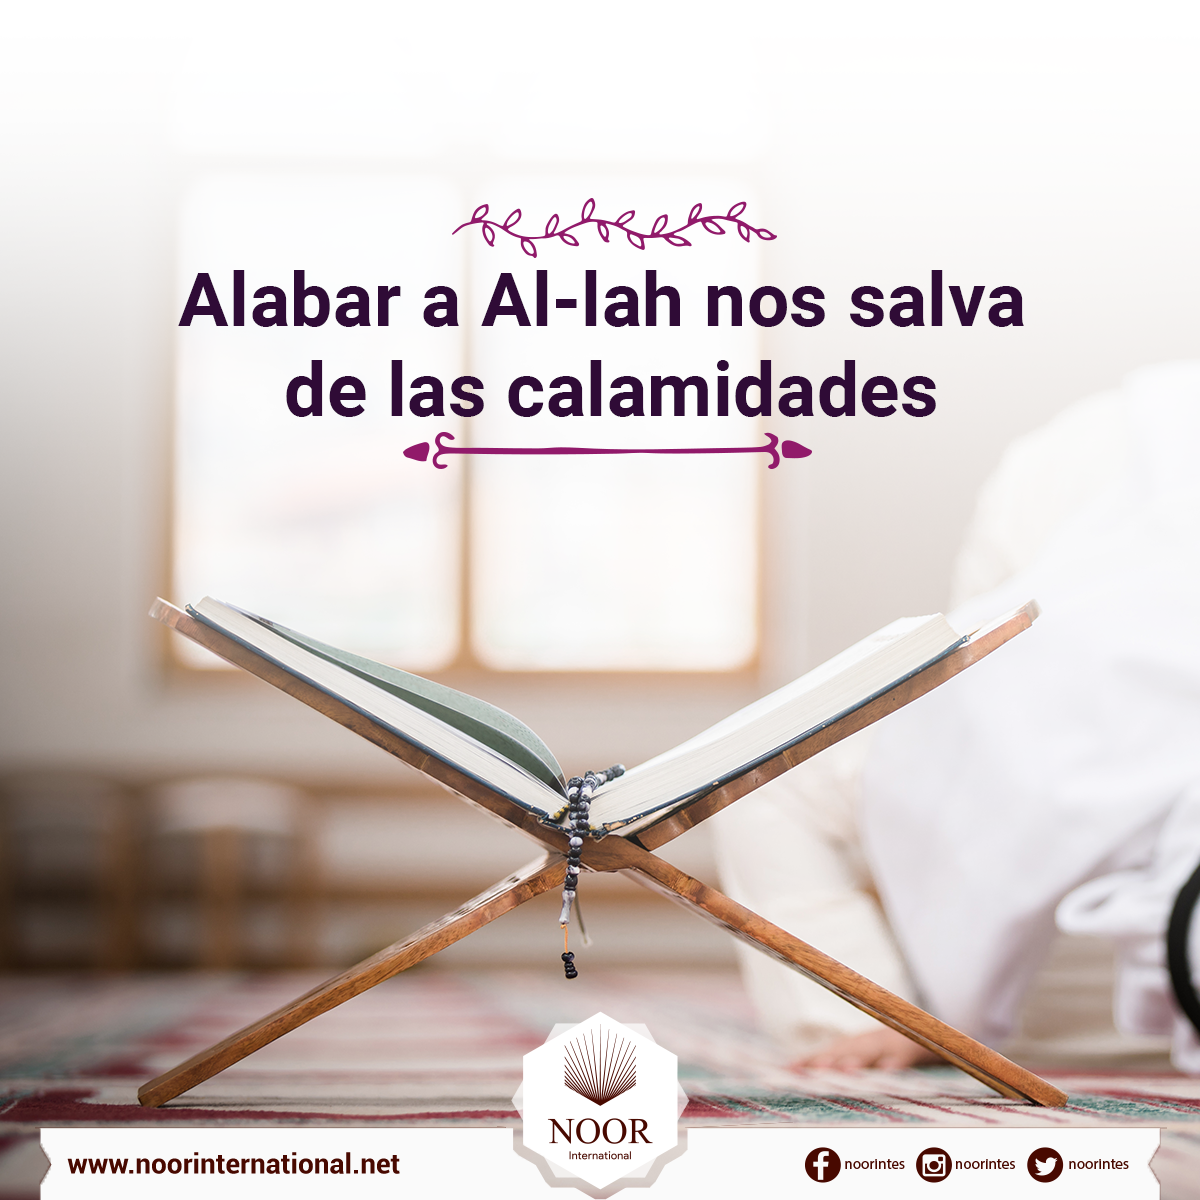 Alabar a Al-lah nos salva de las calamidades